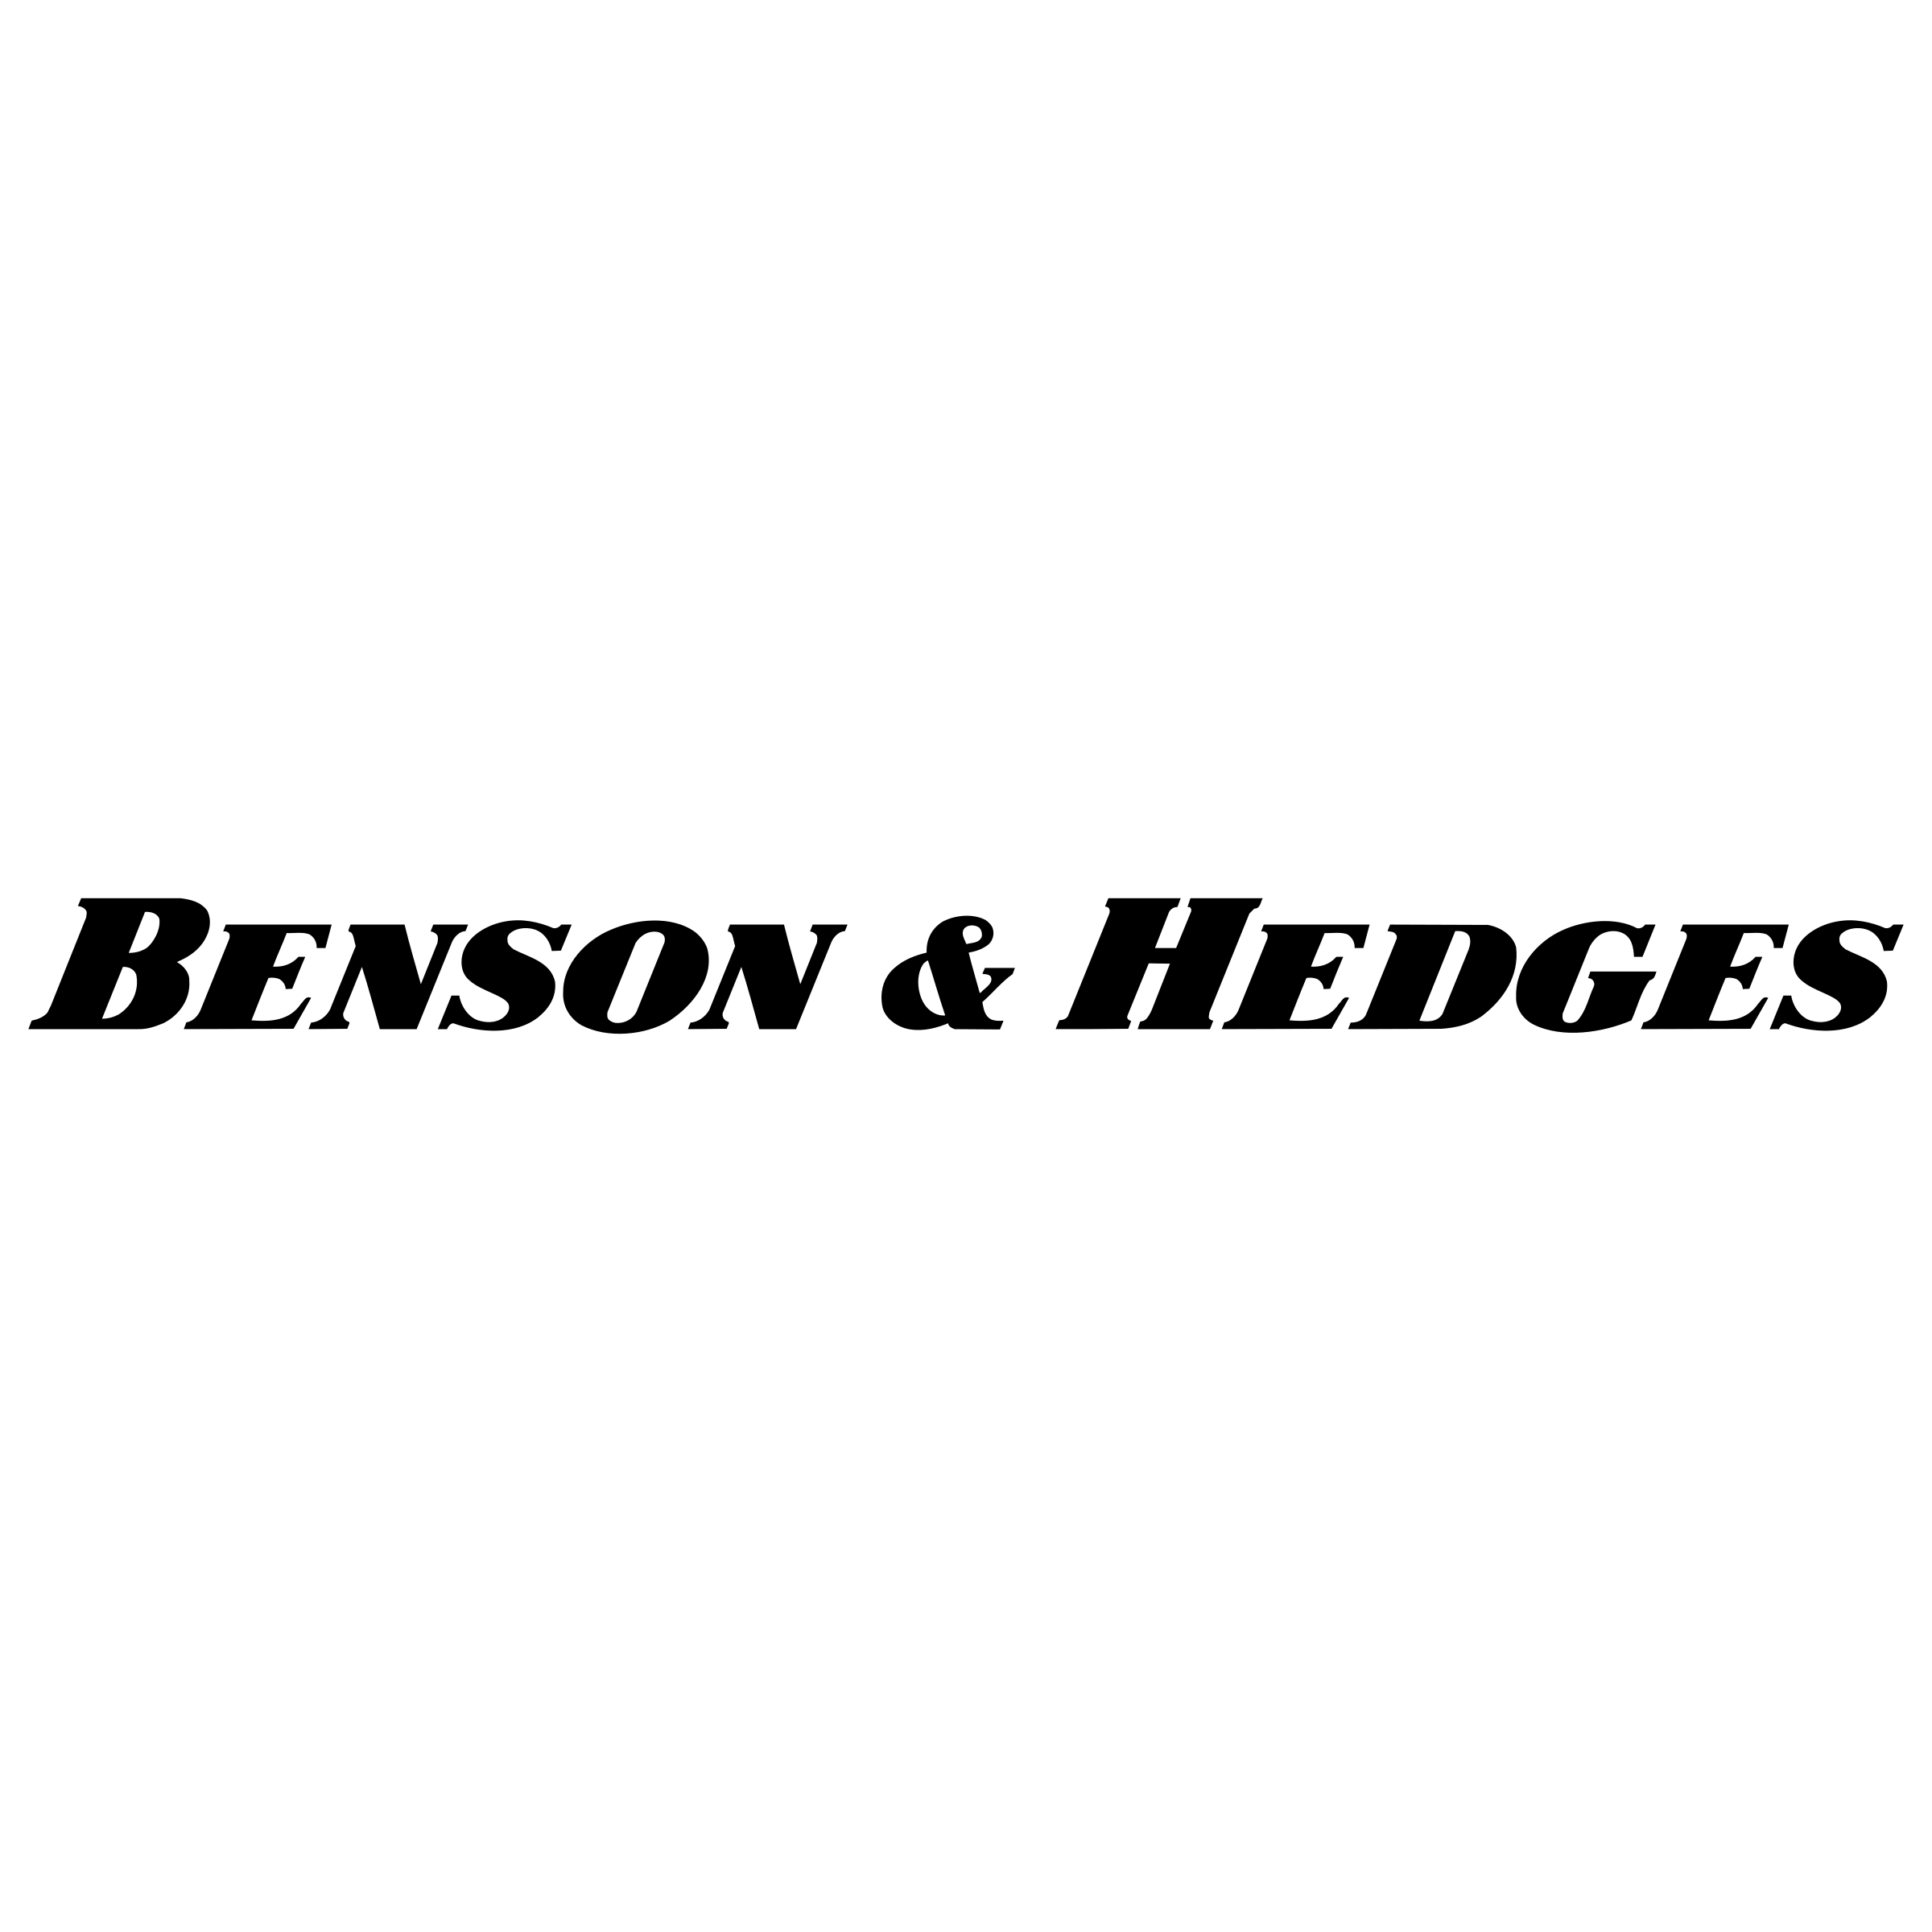 Benson Logo - Benson & Hedges 01 Logo PNG Transparent & SVG Vector - Freebie Supply